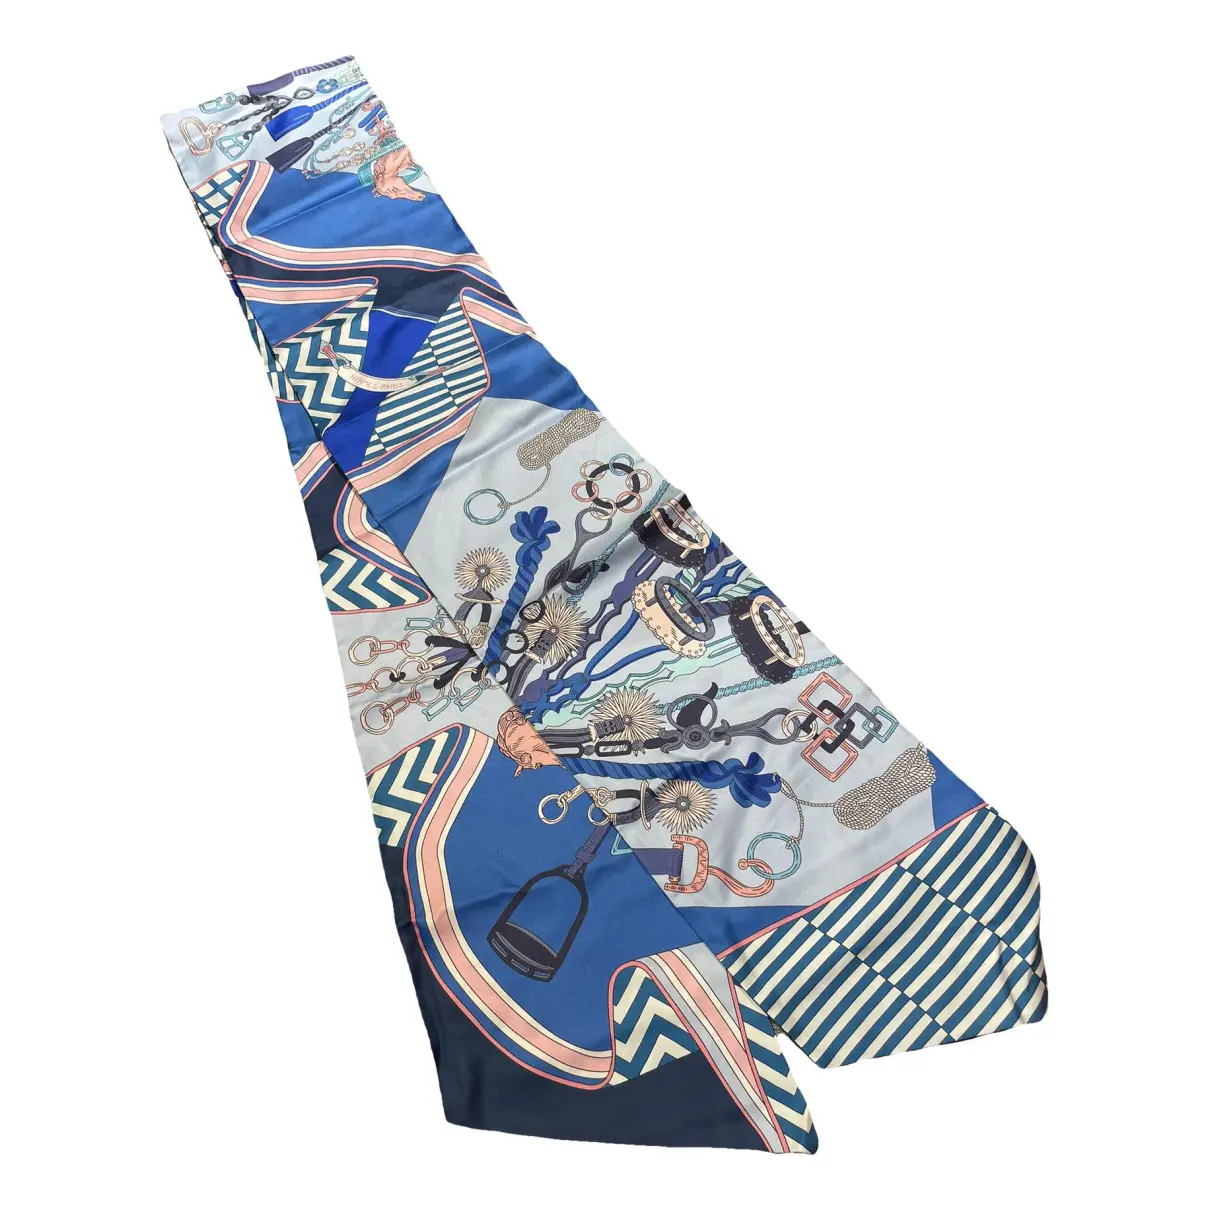 Maxi twilly silk scarf Hermès